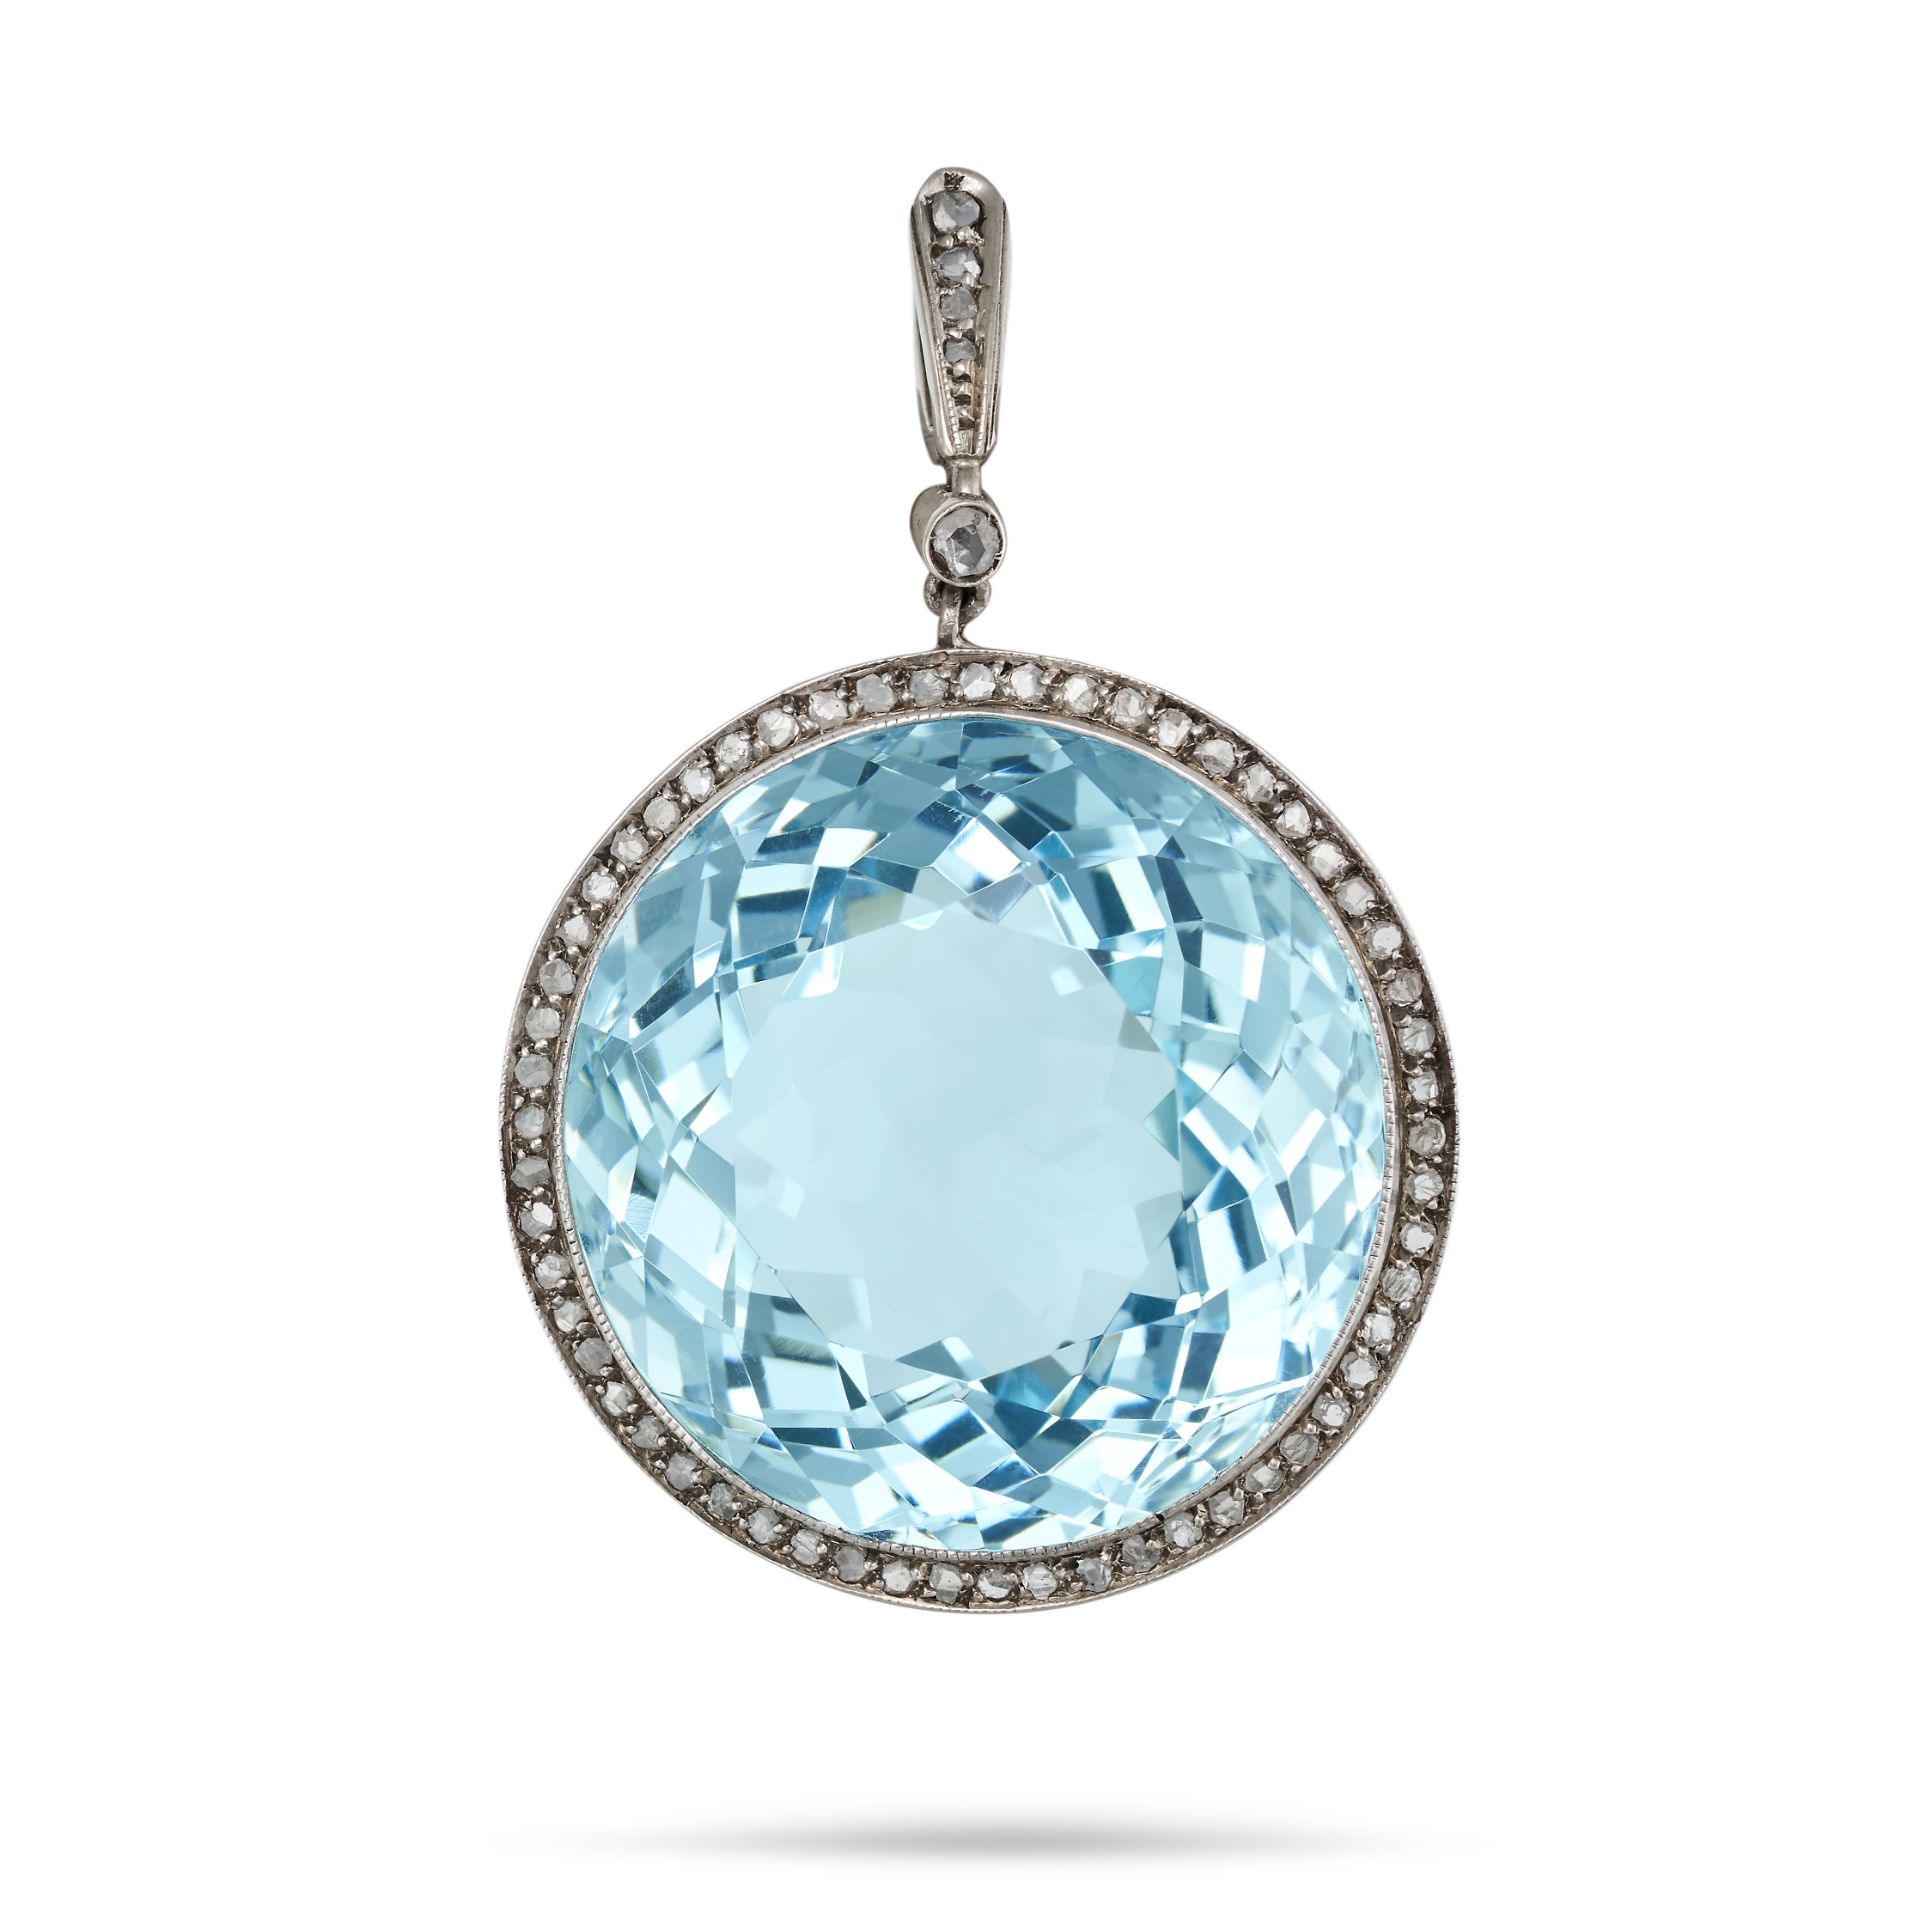 AN AQUAMARINE AND DIAMOND PENDANT set with a round cut aquamarine of approximately 34.05 carats i...